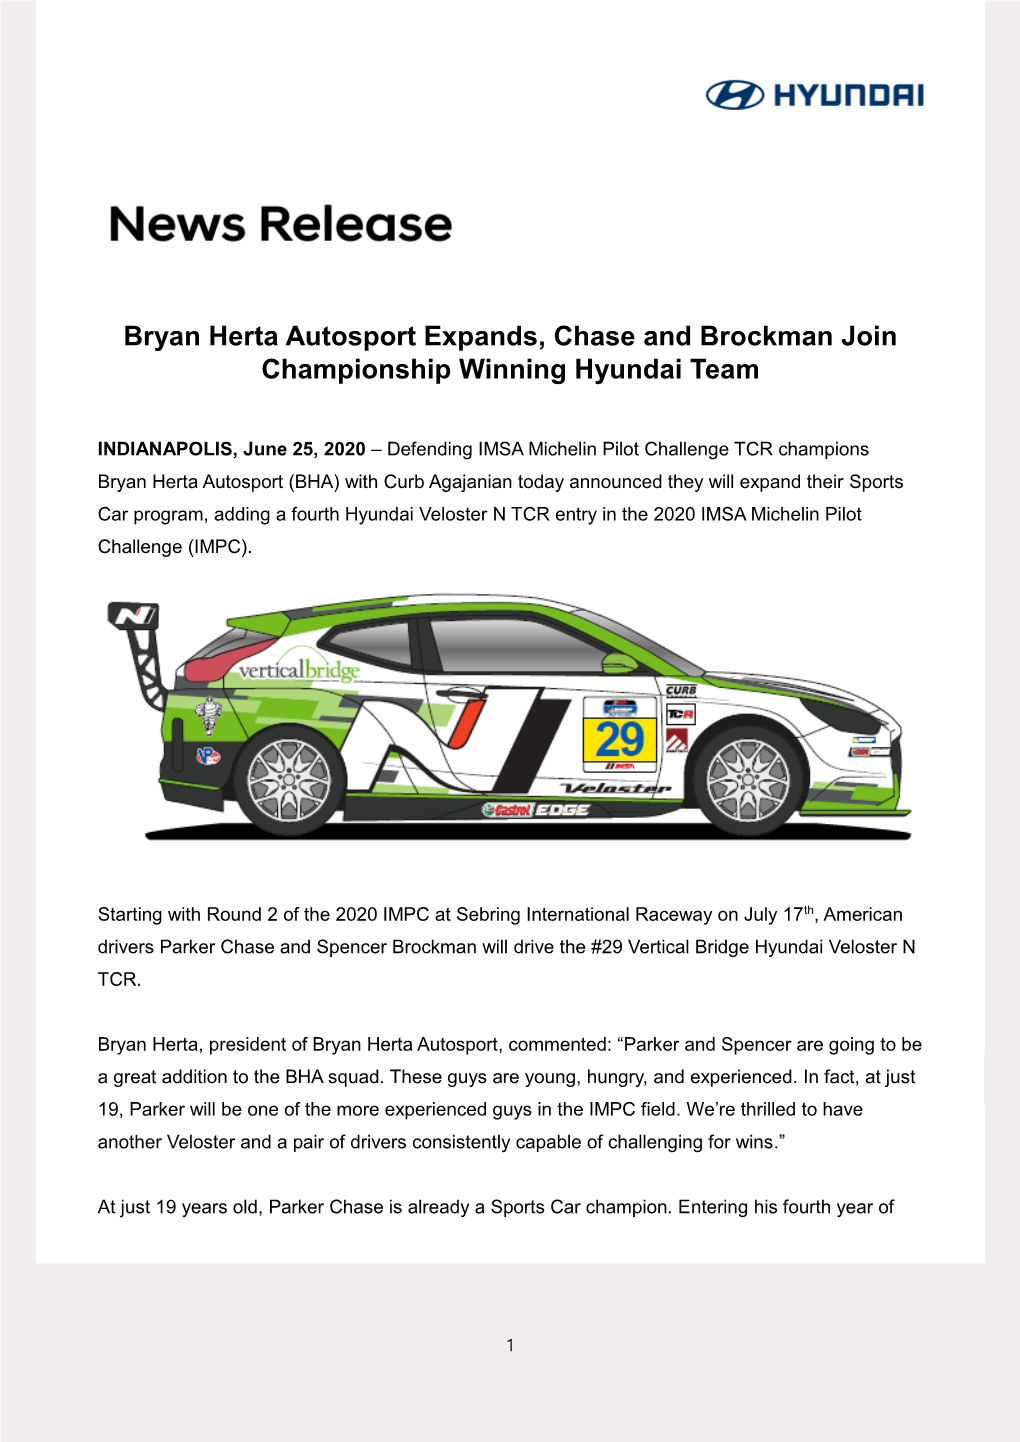 Bryan Herta Autosport Expands, Chase and Brockman Join Championship Winning Hyundai Team